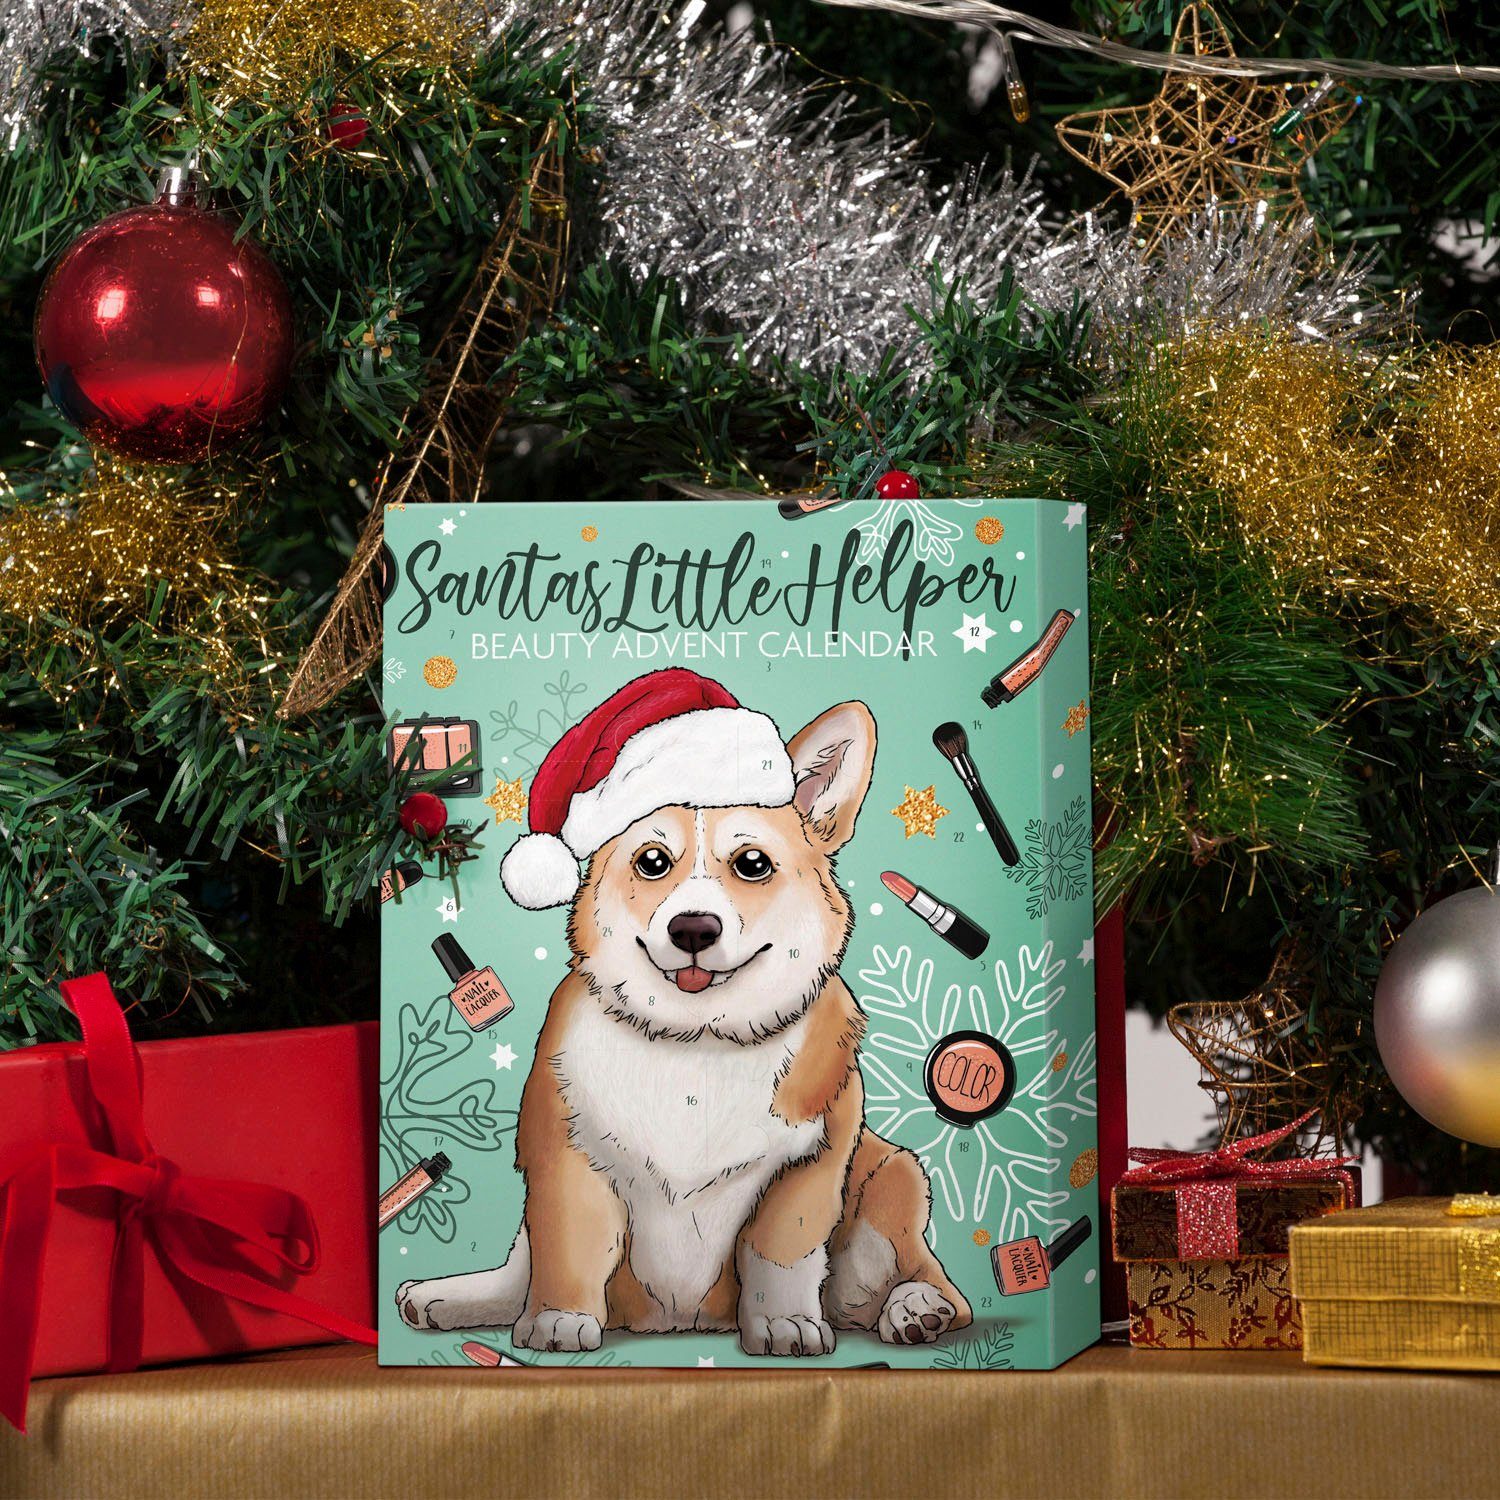 Helper Beauty Advent - Little Santas (Packung, 24-tlg) Adventskalender Calendar